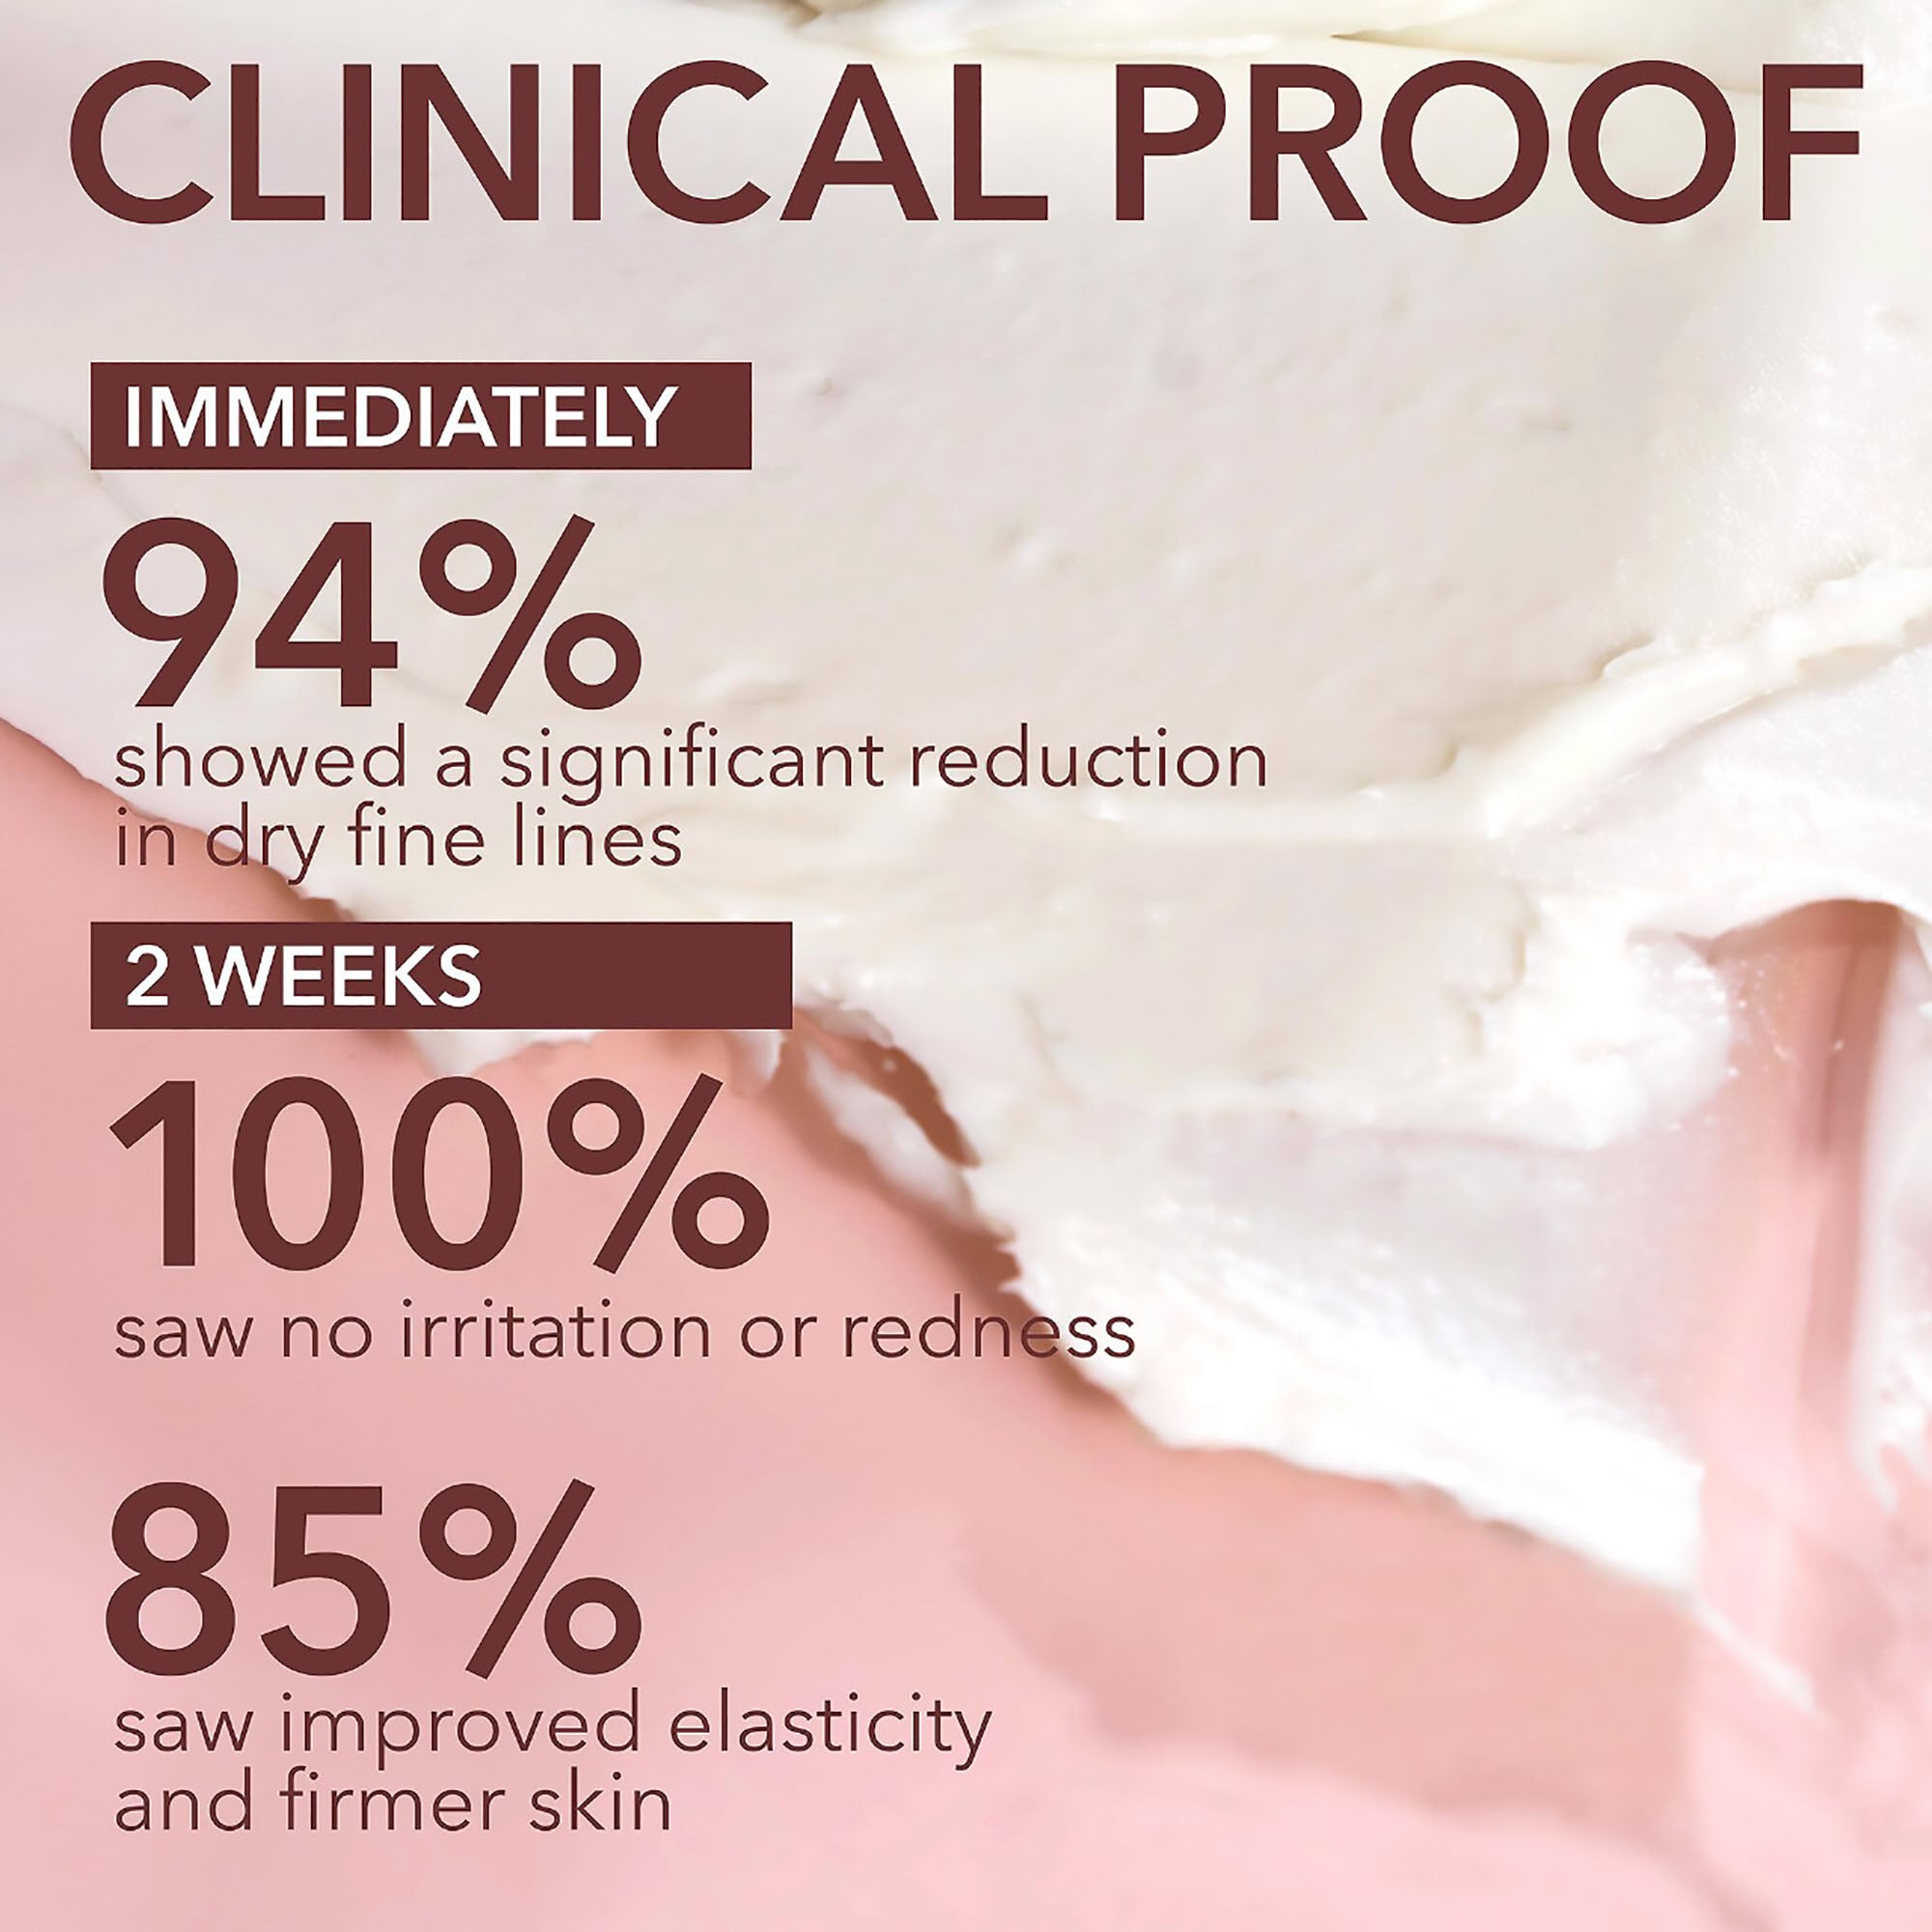 Dr Dennis Gross Advanced Retinol + Ferulic Intense Wrinkle Cream / 1.7OZ